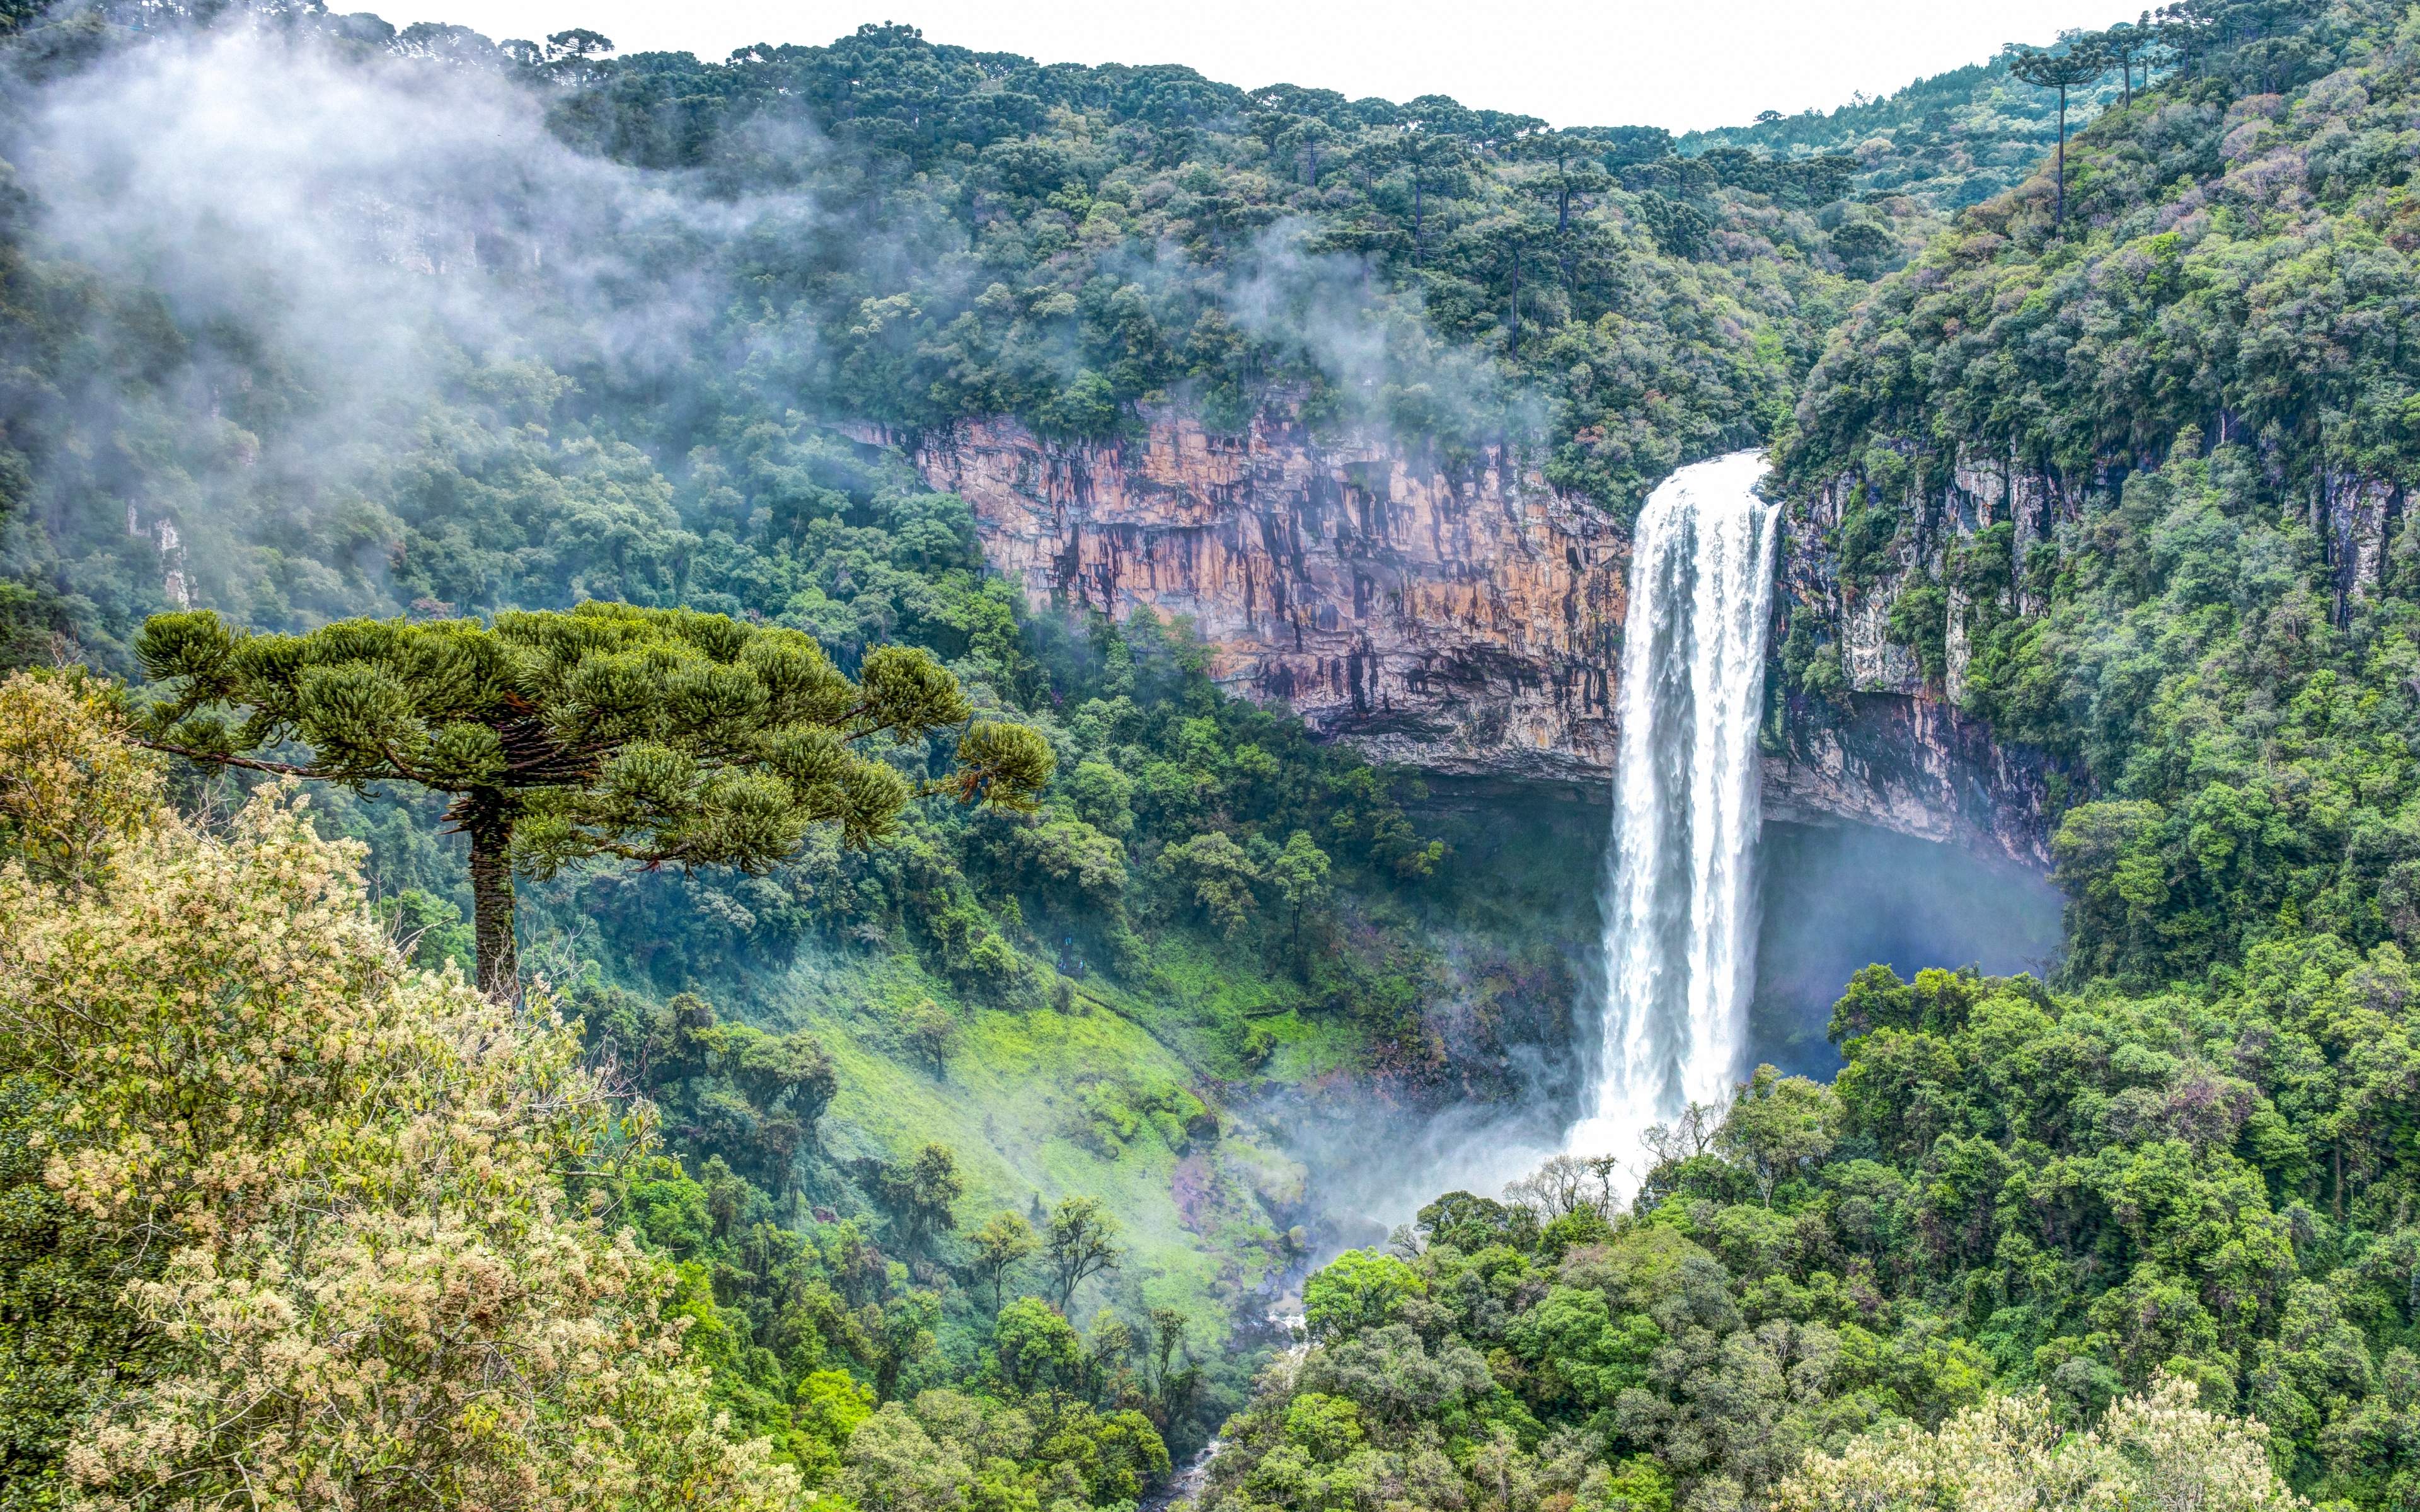 Free download Rainforest Waterfall Wallpaper High Resolution at